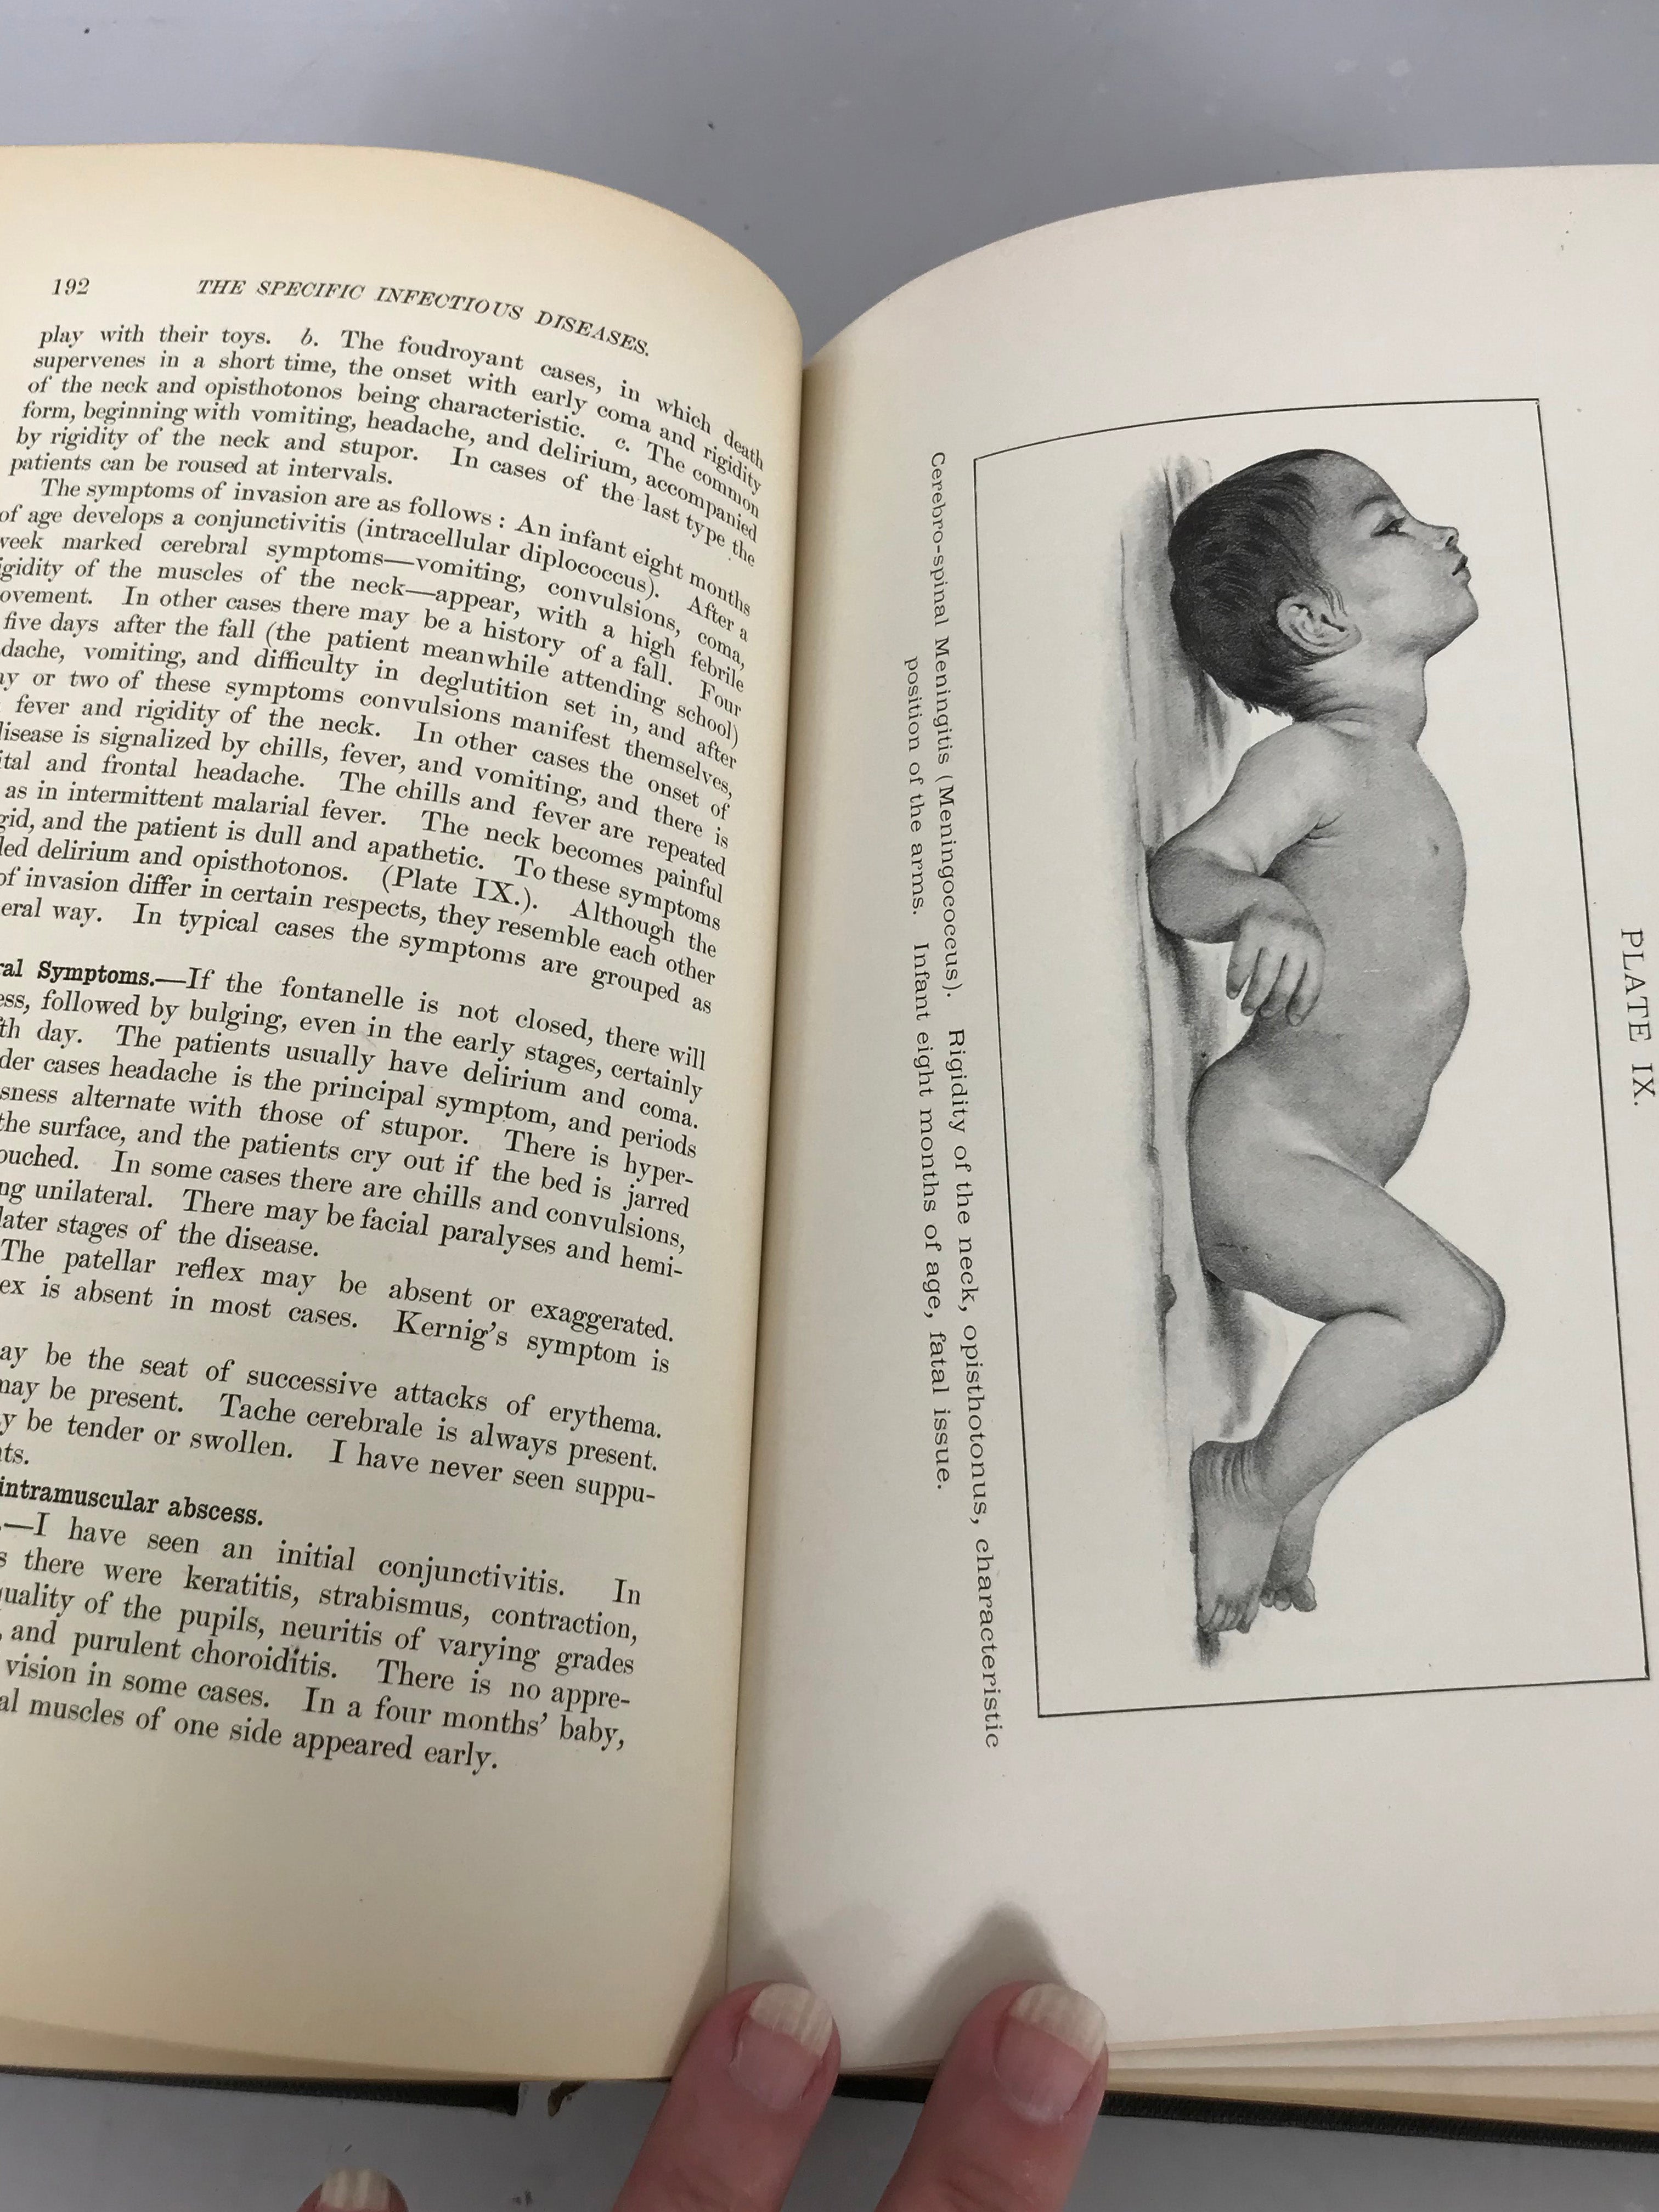 Diseases of Infancy and Childhood by Henry Koplik 1902 HC